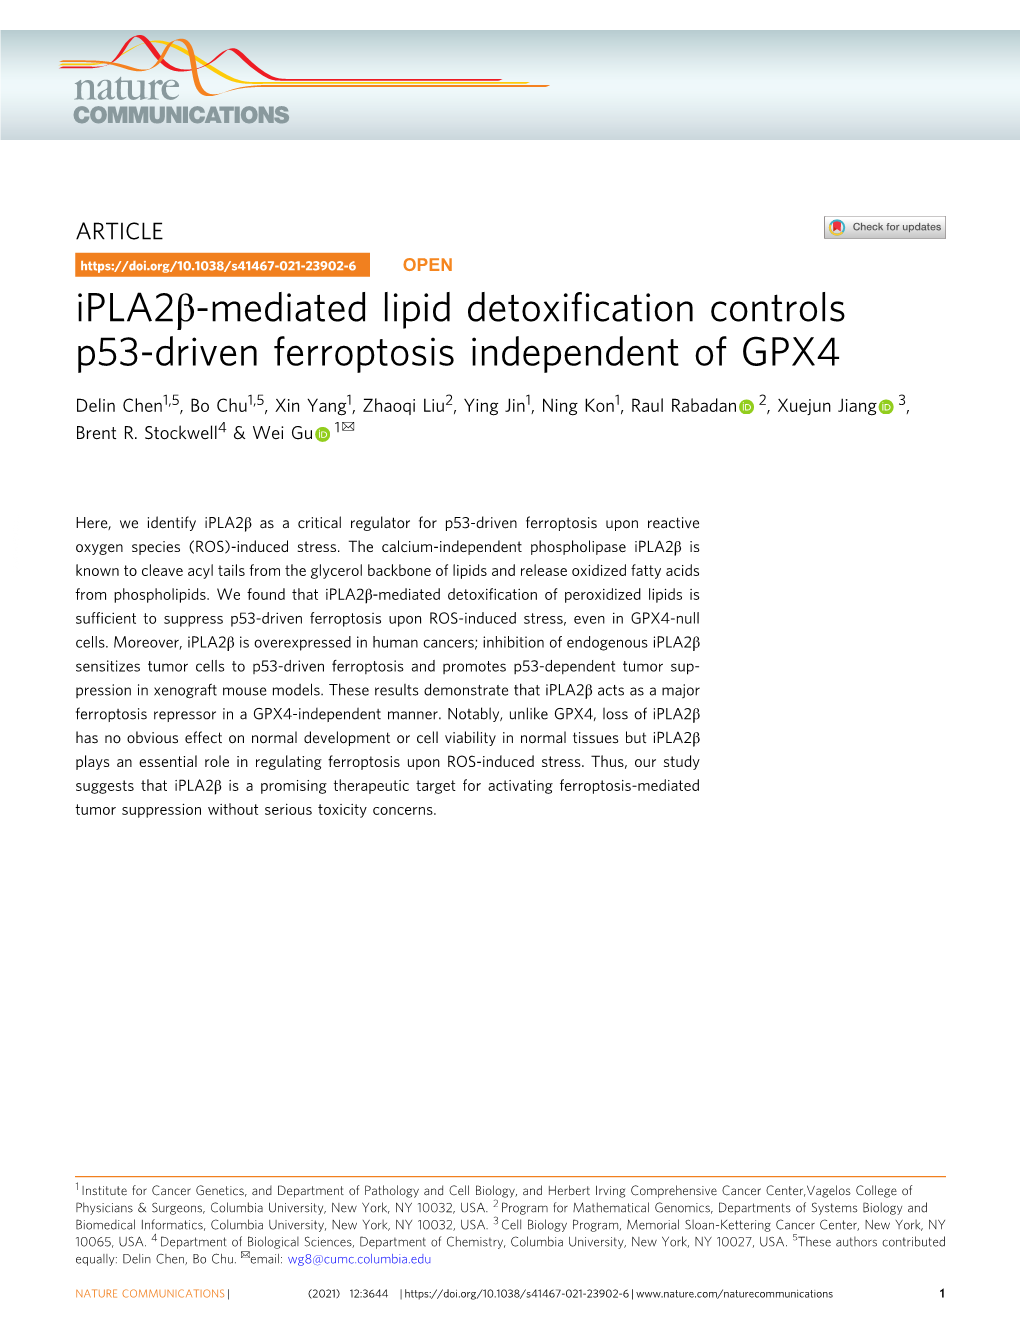 Ipla2î²-Mediated Lipid Detoxification Controls P53-Driven Ferroptosis Independent of GPX4